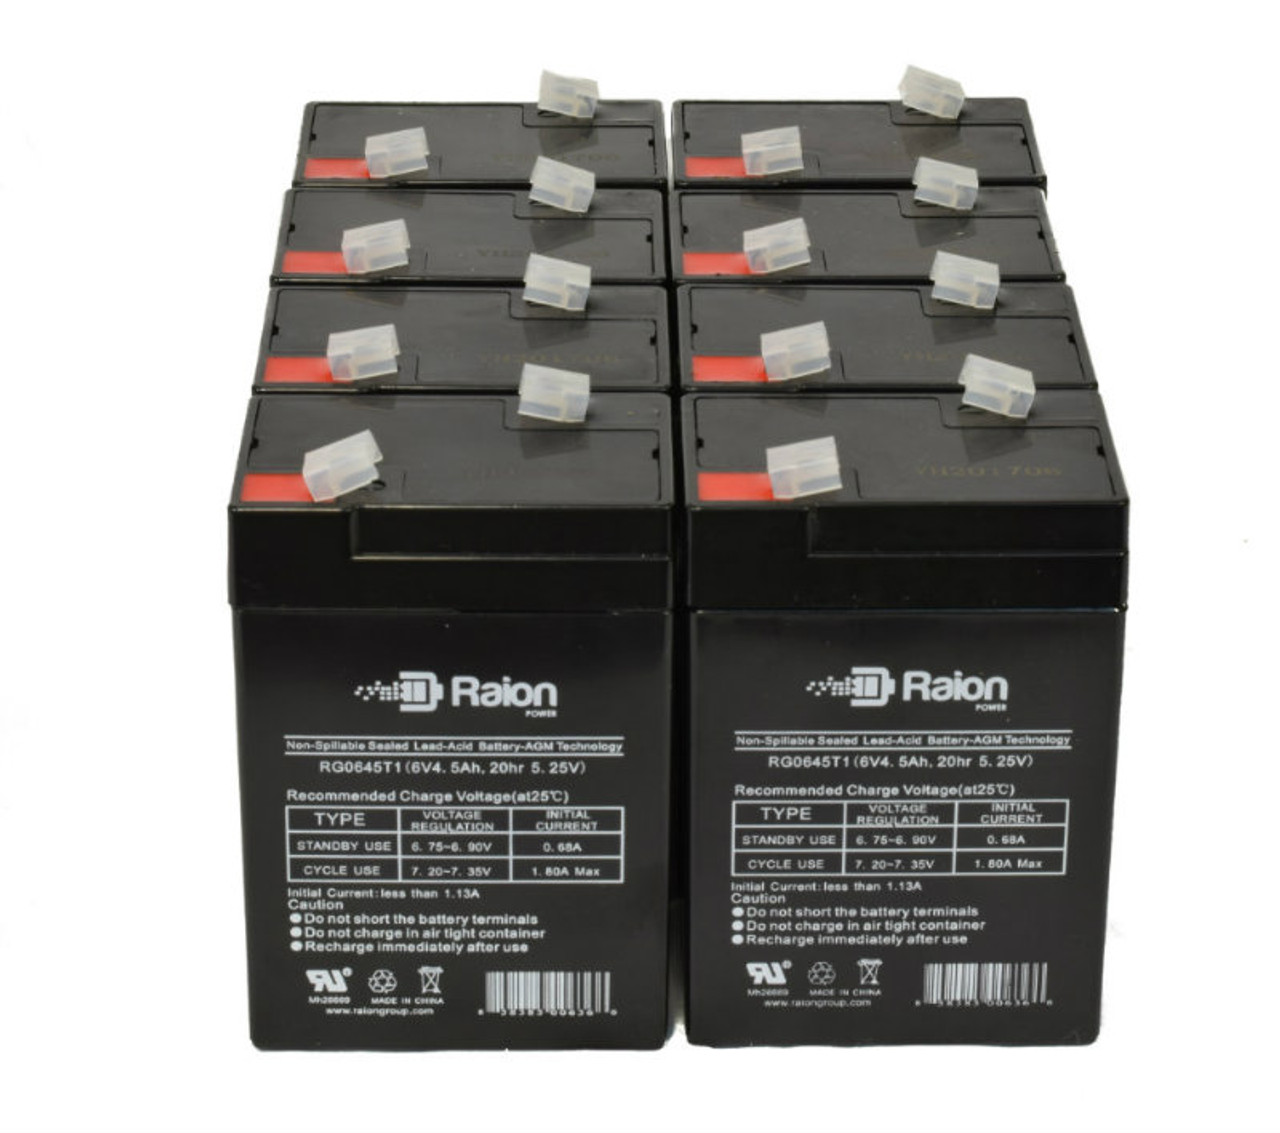 Raion Power 6 Volt 4.5Ah RG0645T1 Replacement Battery for Koyosonic NP3.5-6 - 8 Pack